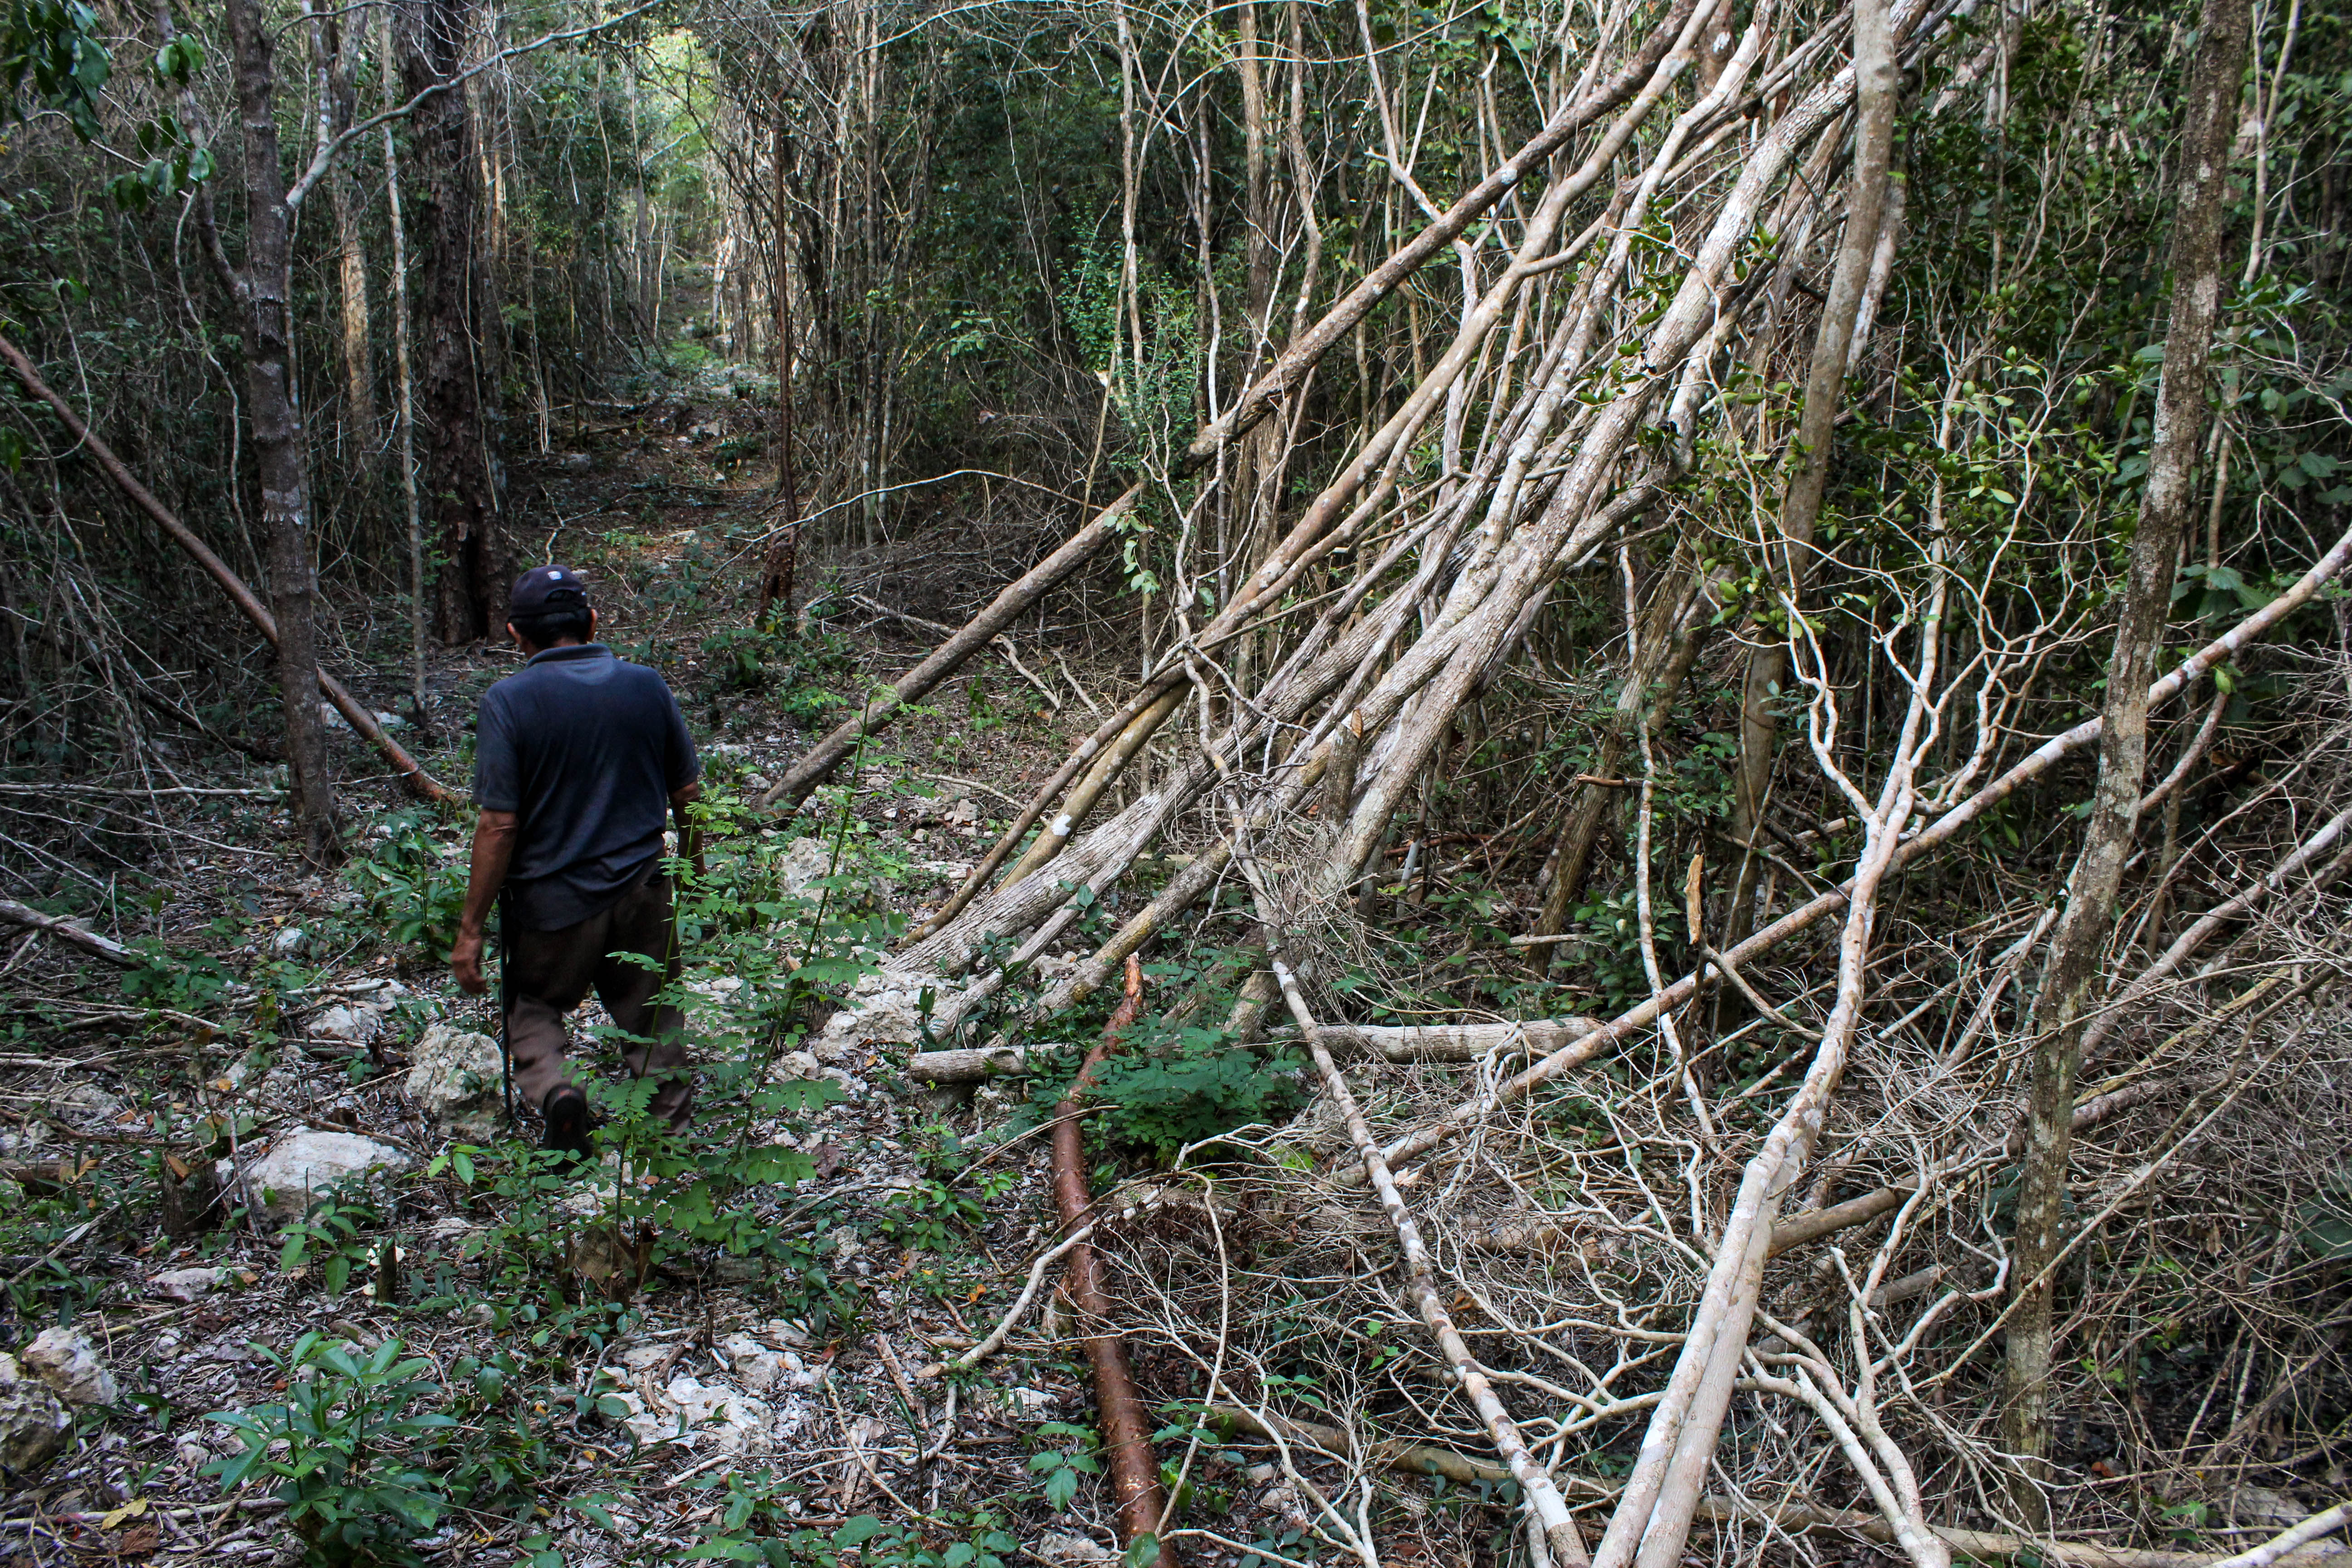 Kanxoc denuncia tala ilegal ordenada por la Procuraduría Agraria